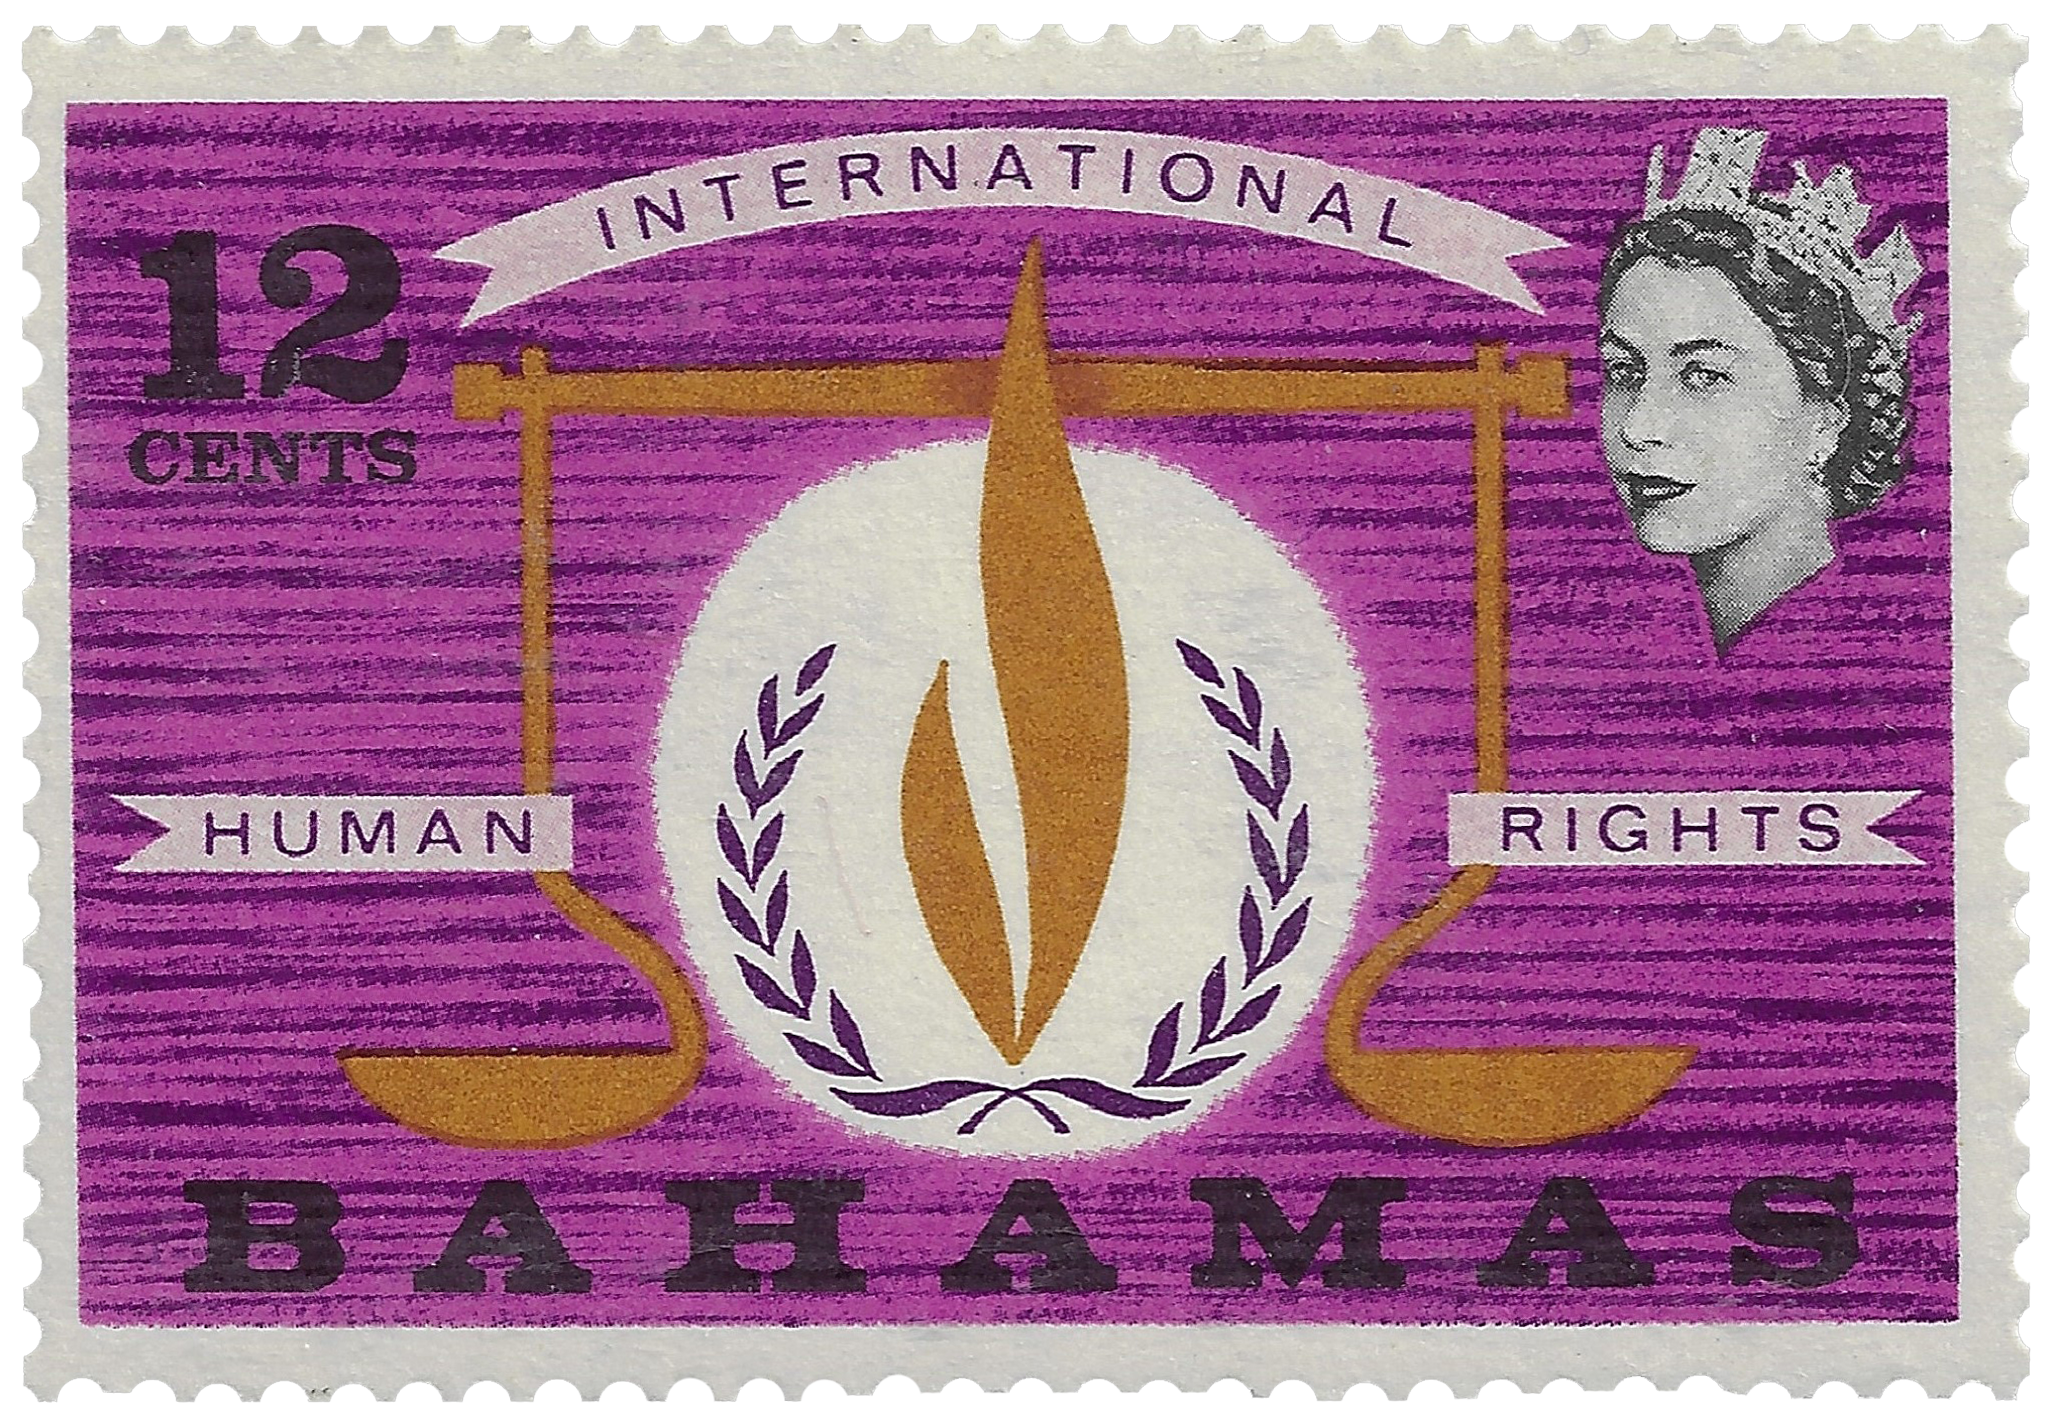 12c 1968, International Human Rights